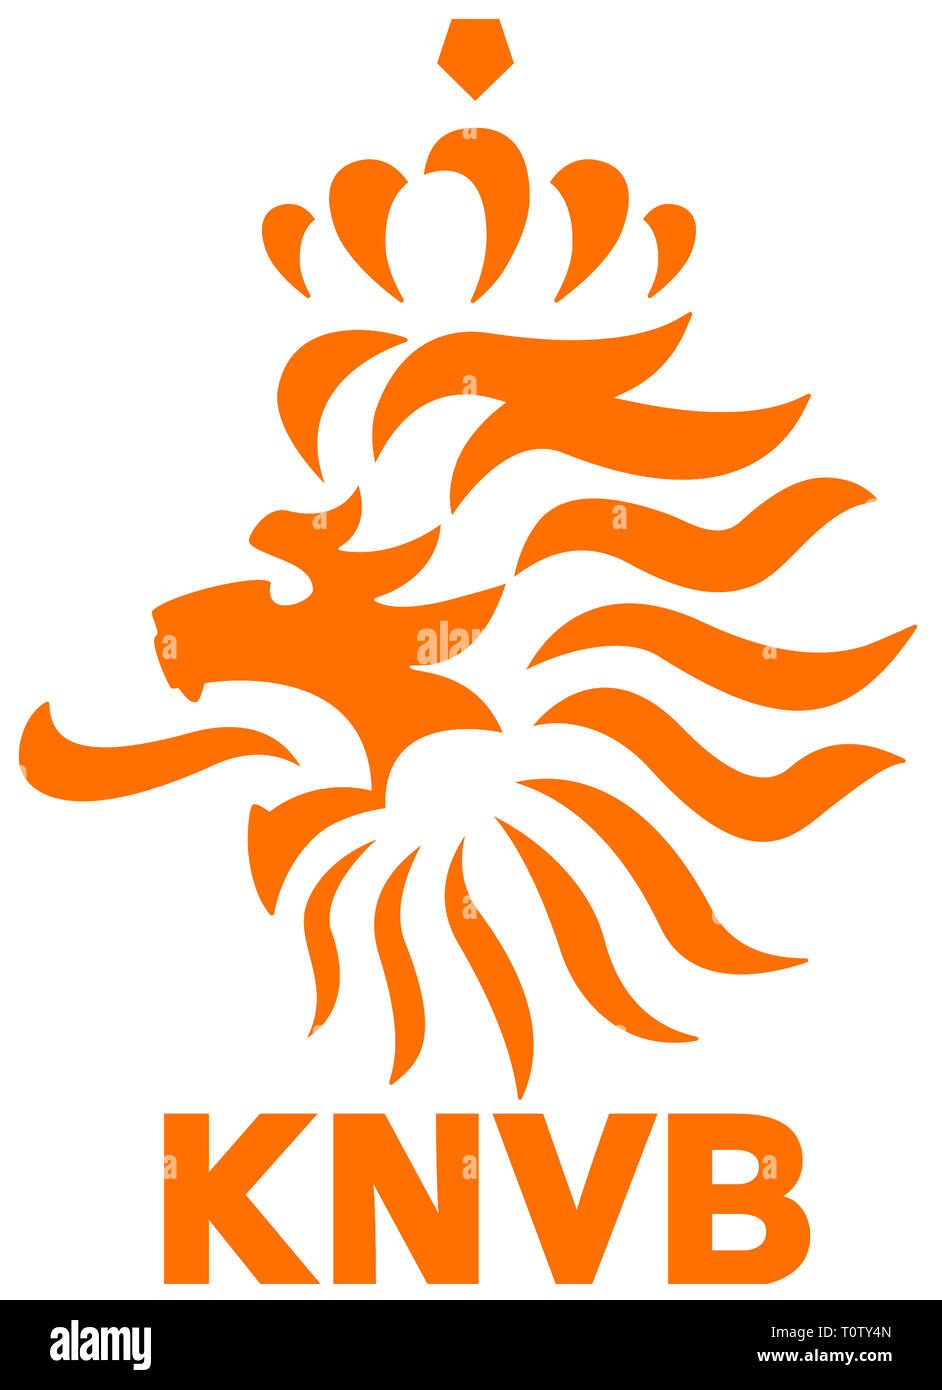 KNVB - Royal Dutch Football Association on Behance